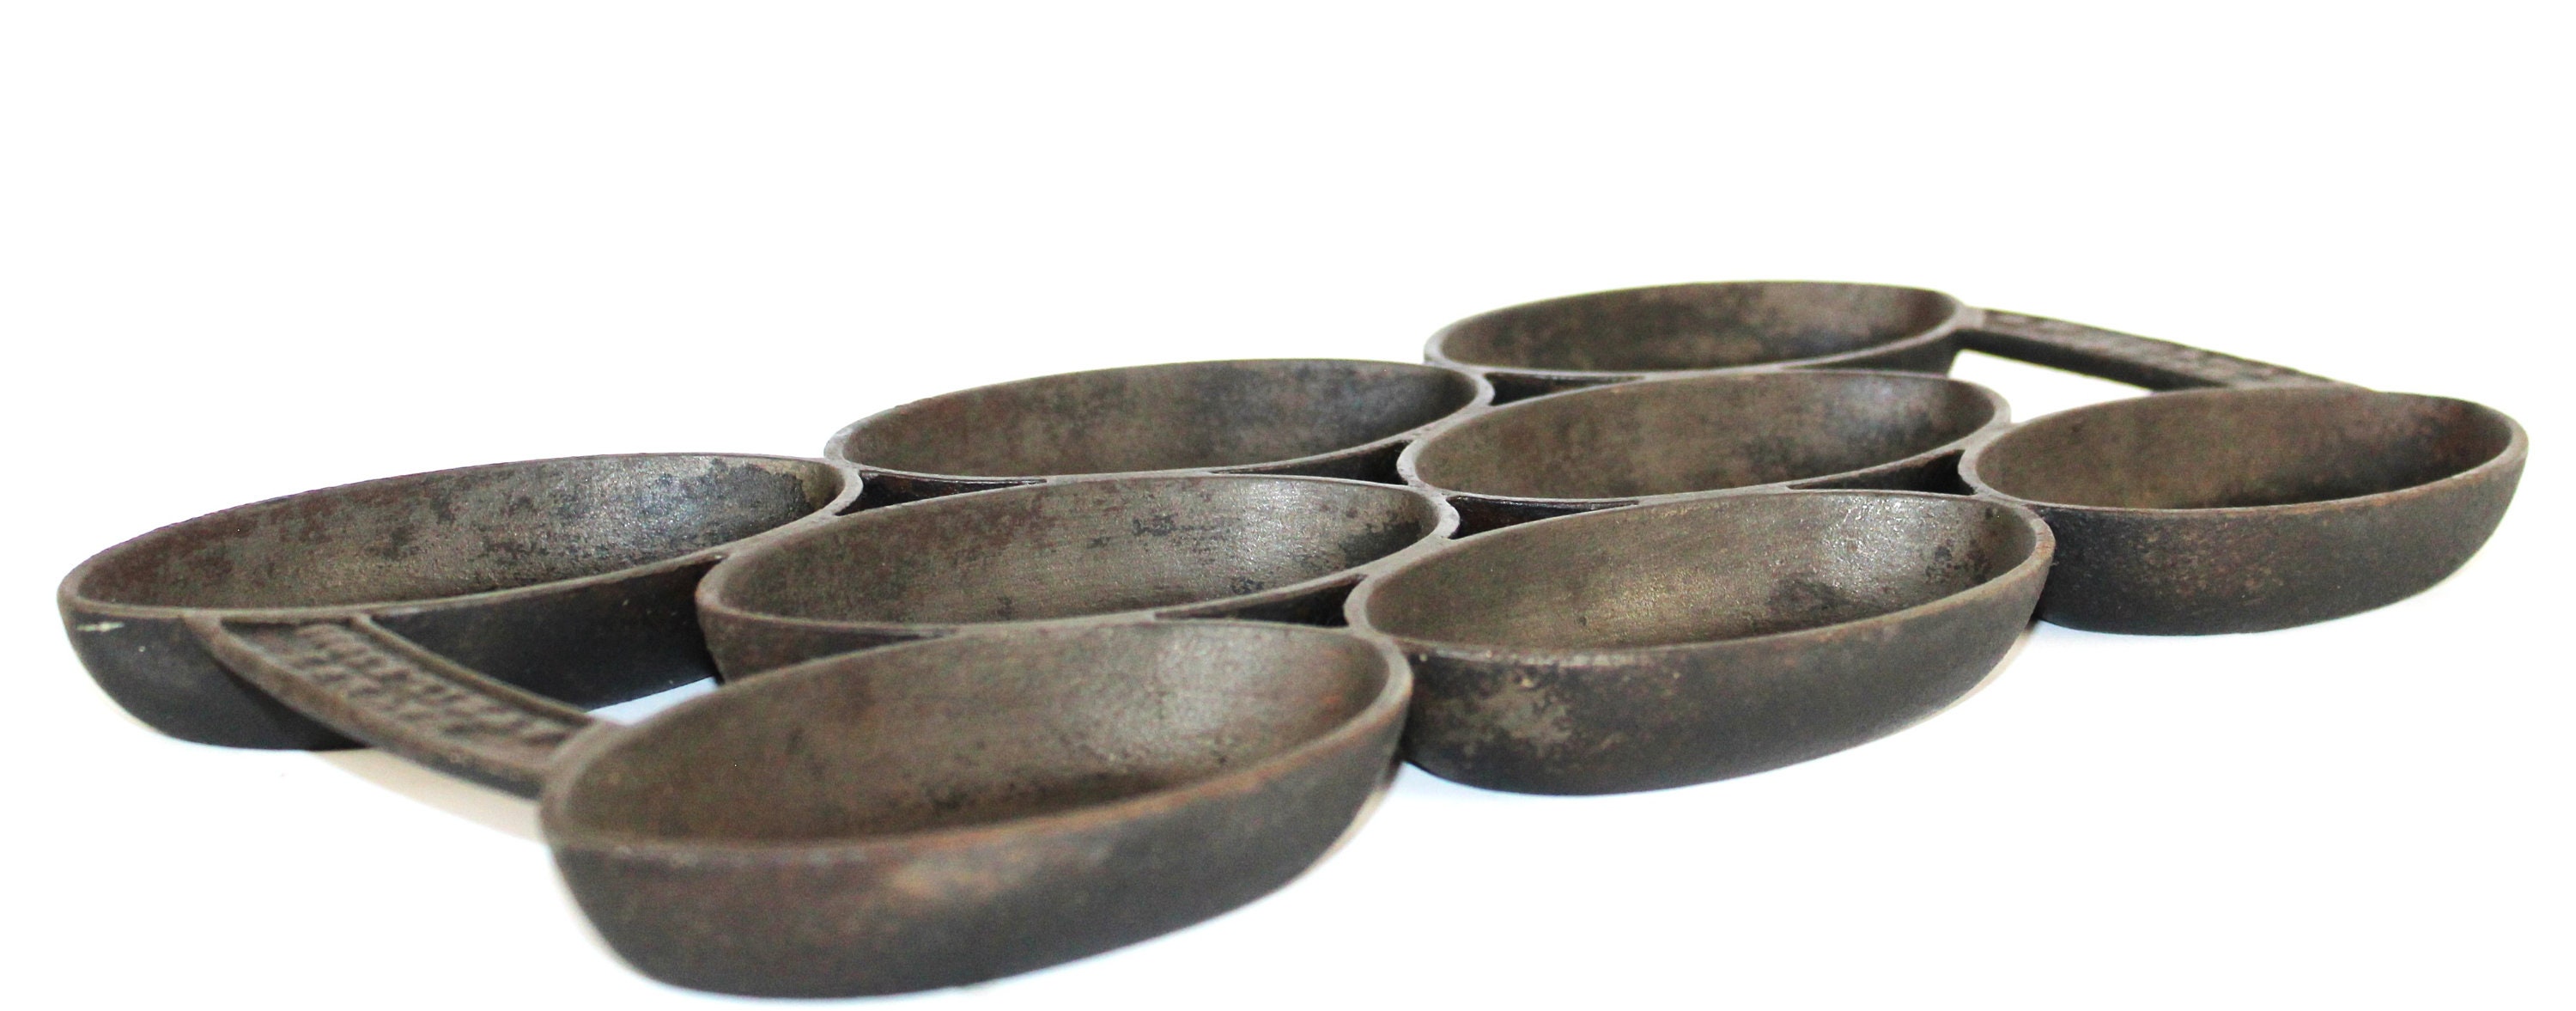 Antique Cast Iron Muffin Pan - Has Gatemarks 11 x 14 - Northern